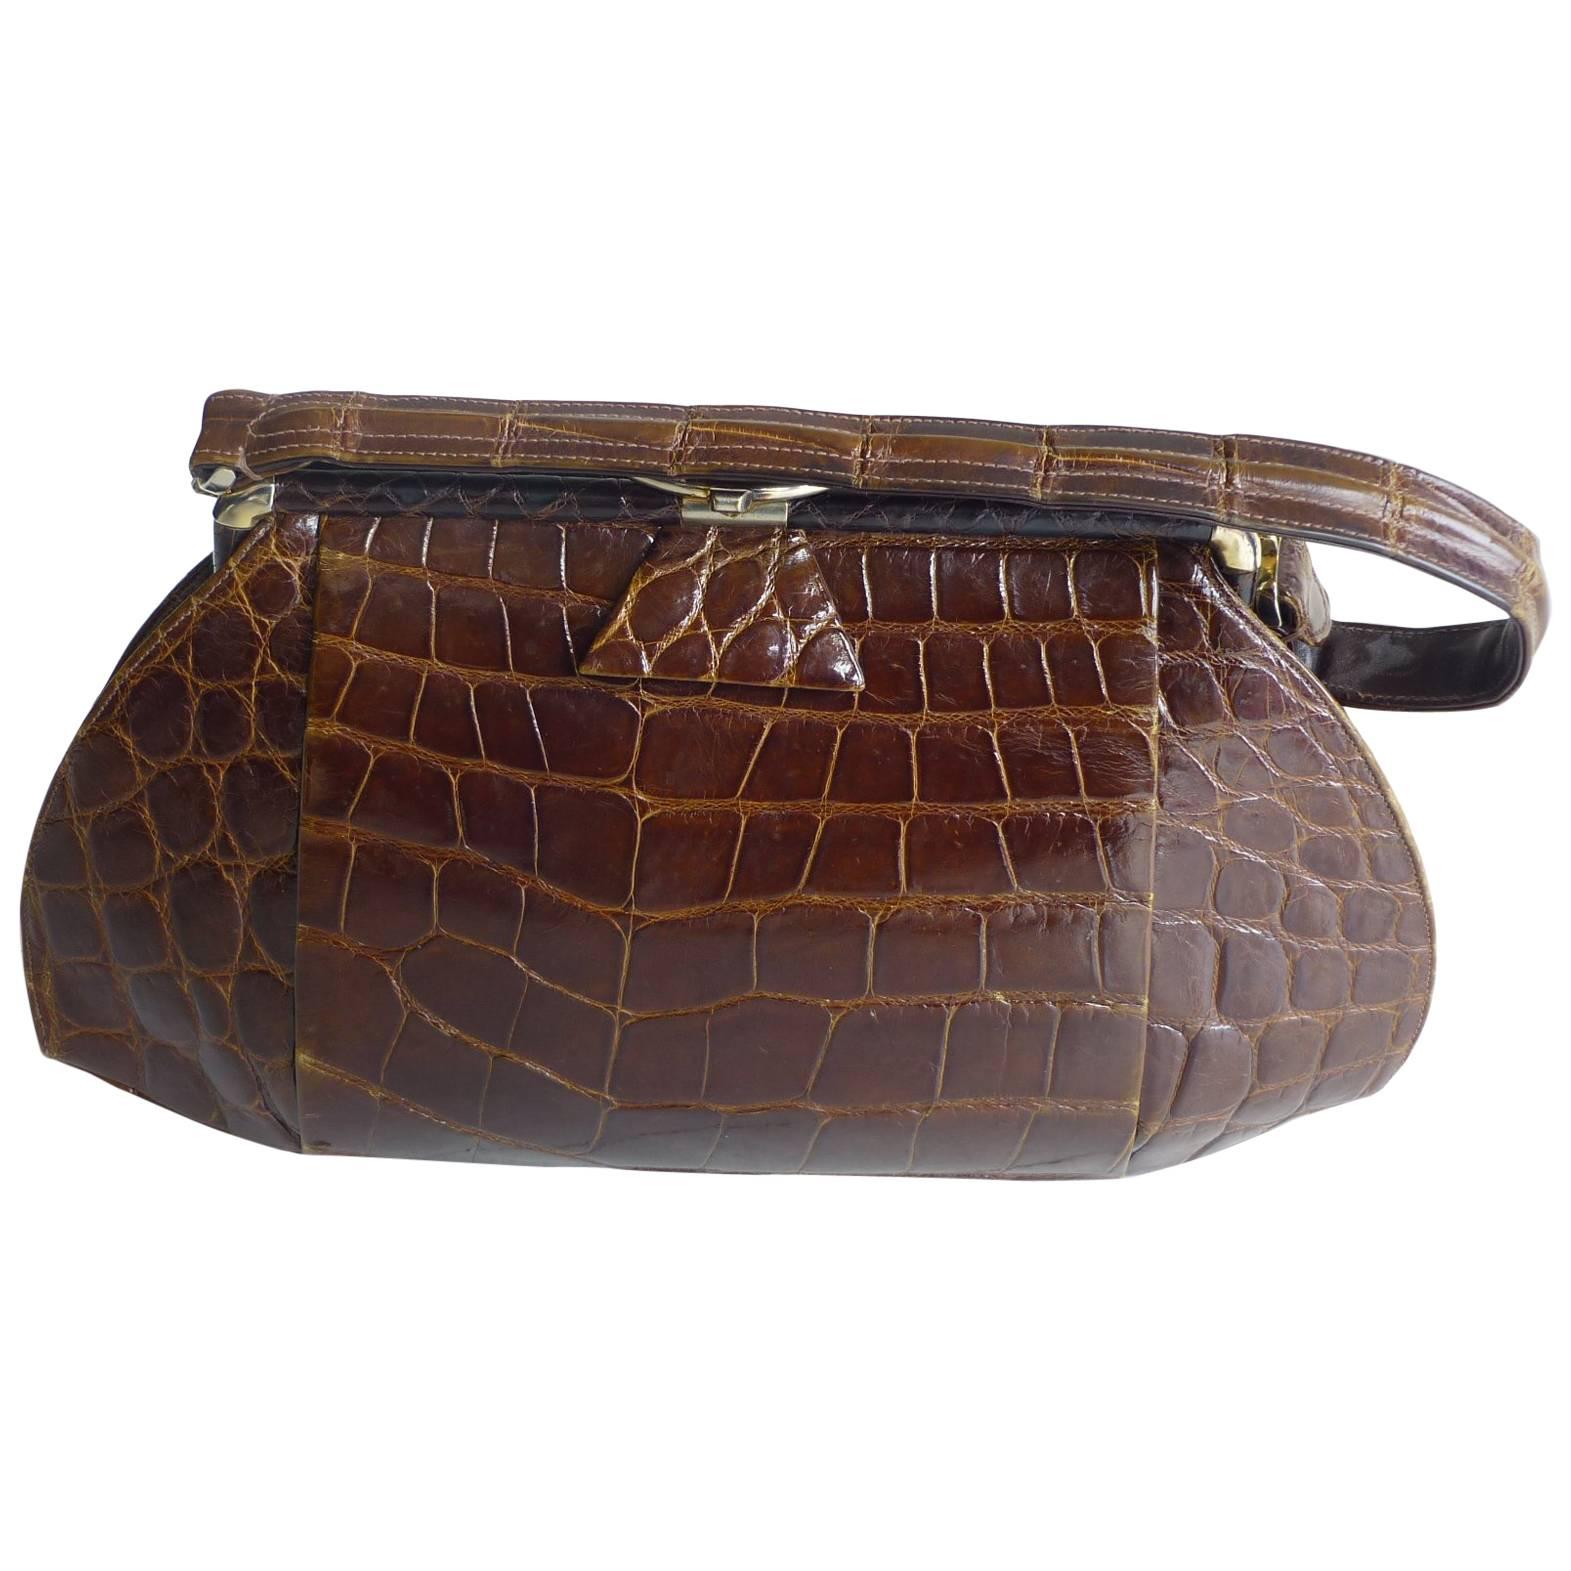 Very Well Made 1950s Brown Crocodile Handbag